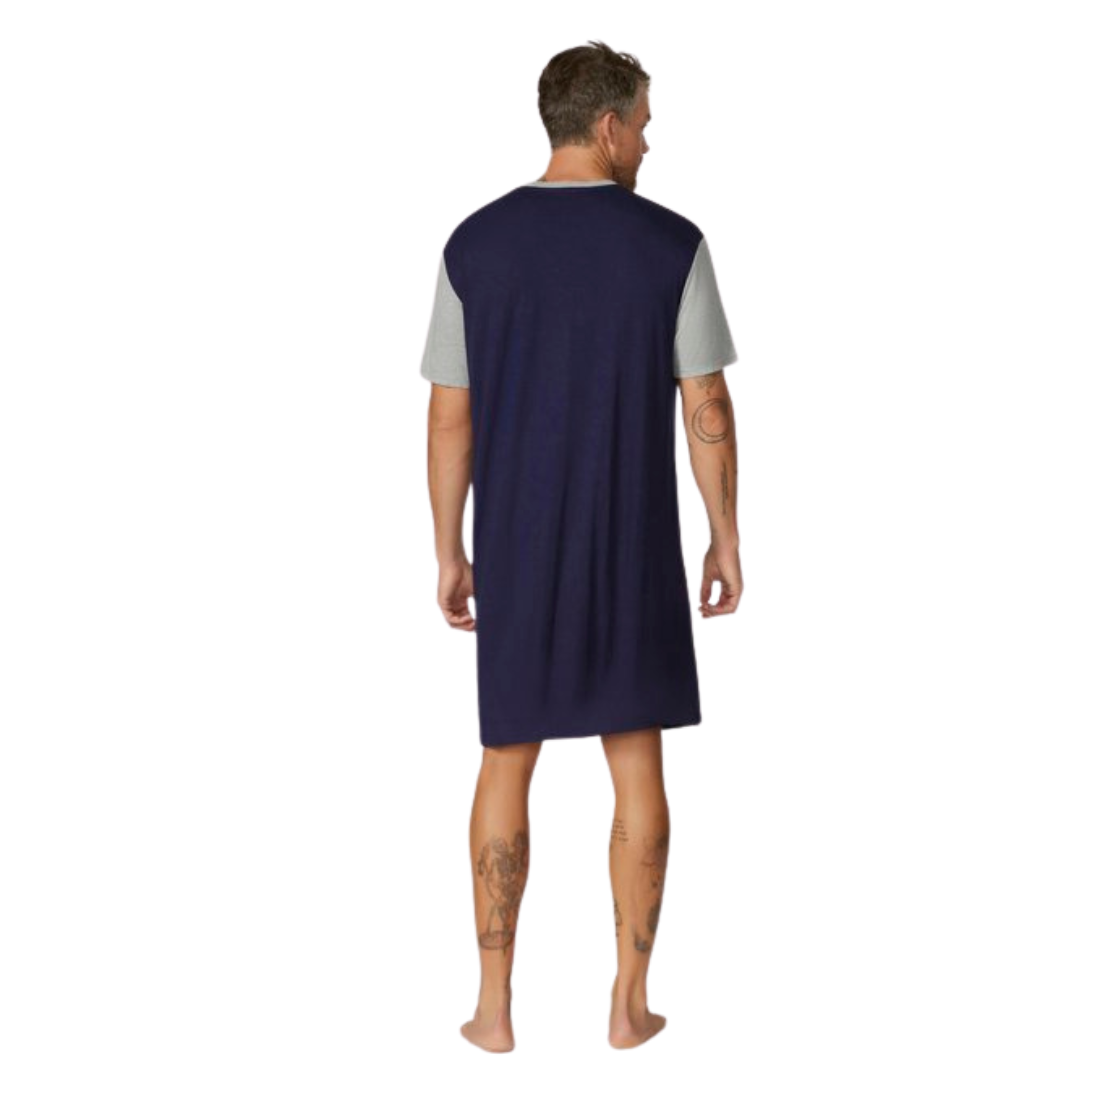 Short Sleeve Bamboo Night Shirt - Navy/Grey Navy/Grey Mens Sleepwear by Contare | The Bloke Shop